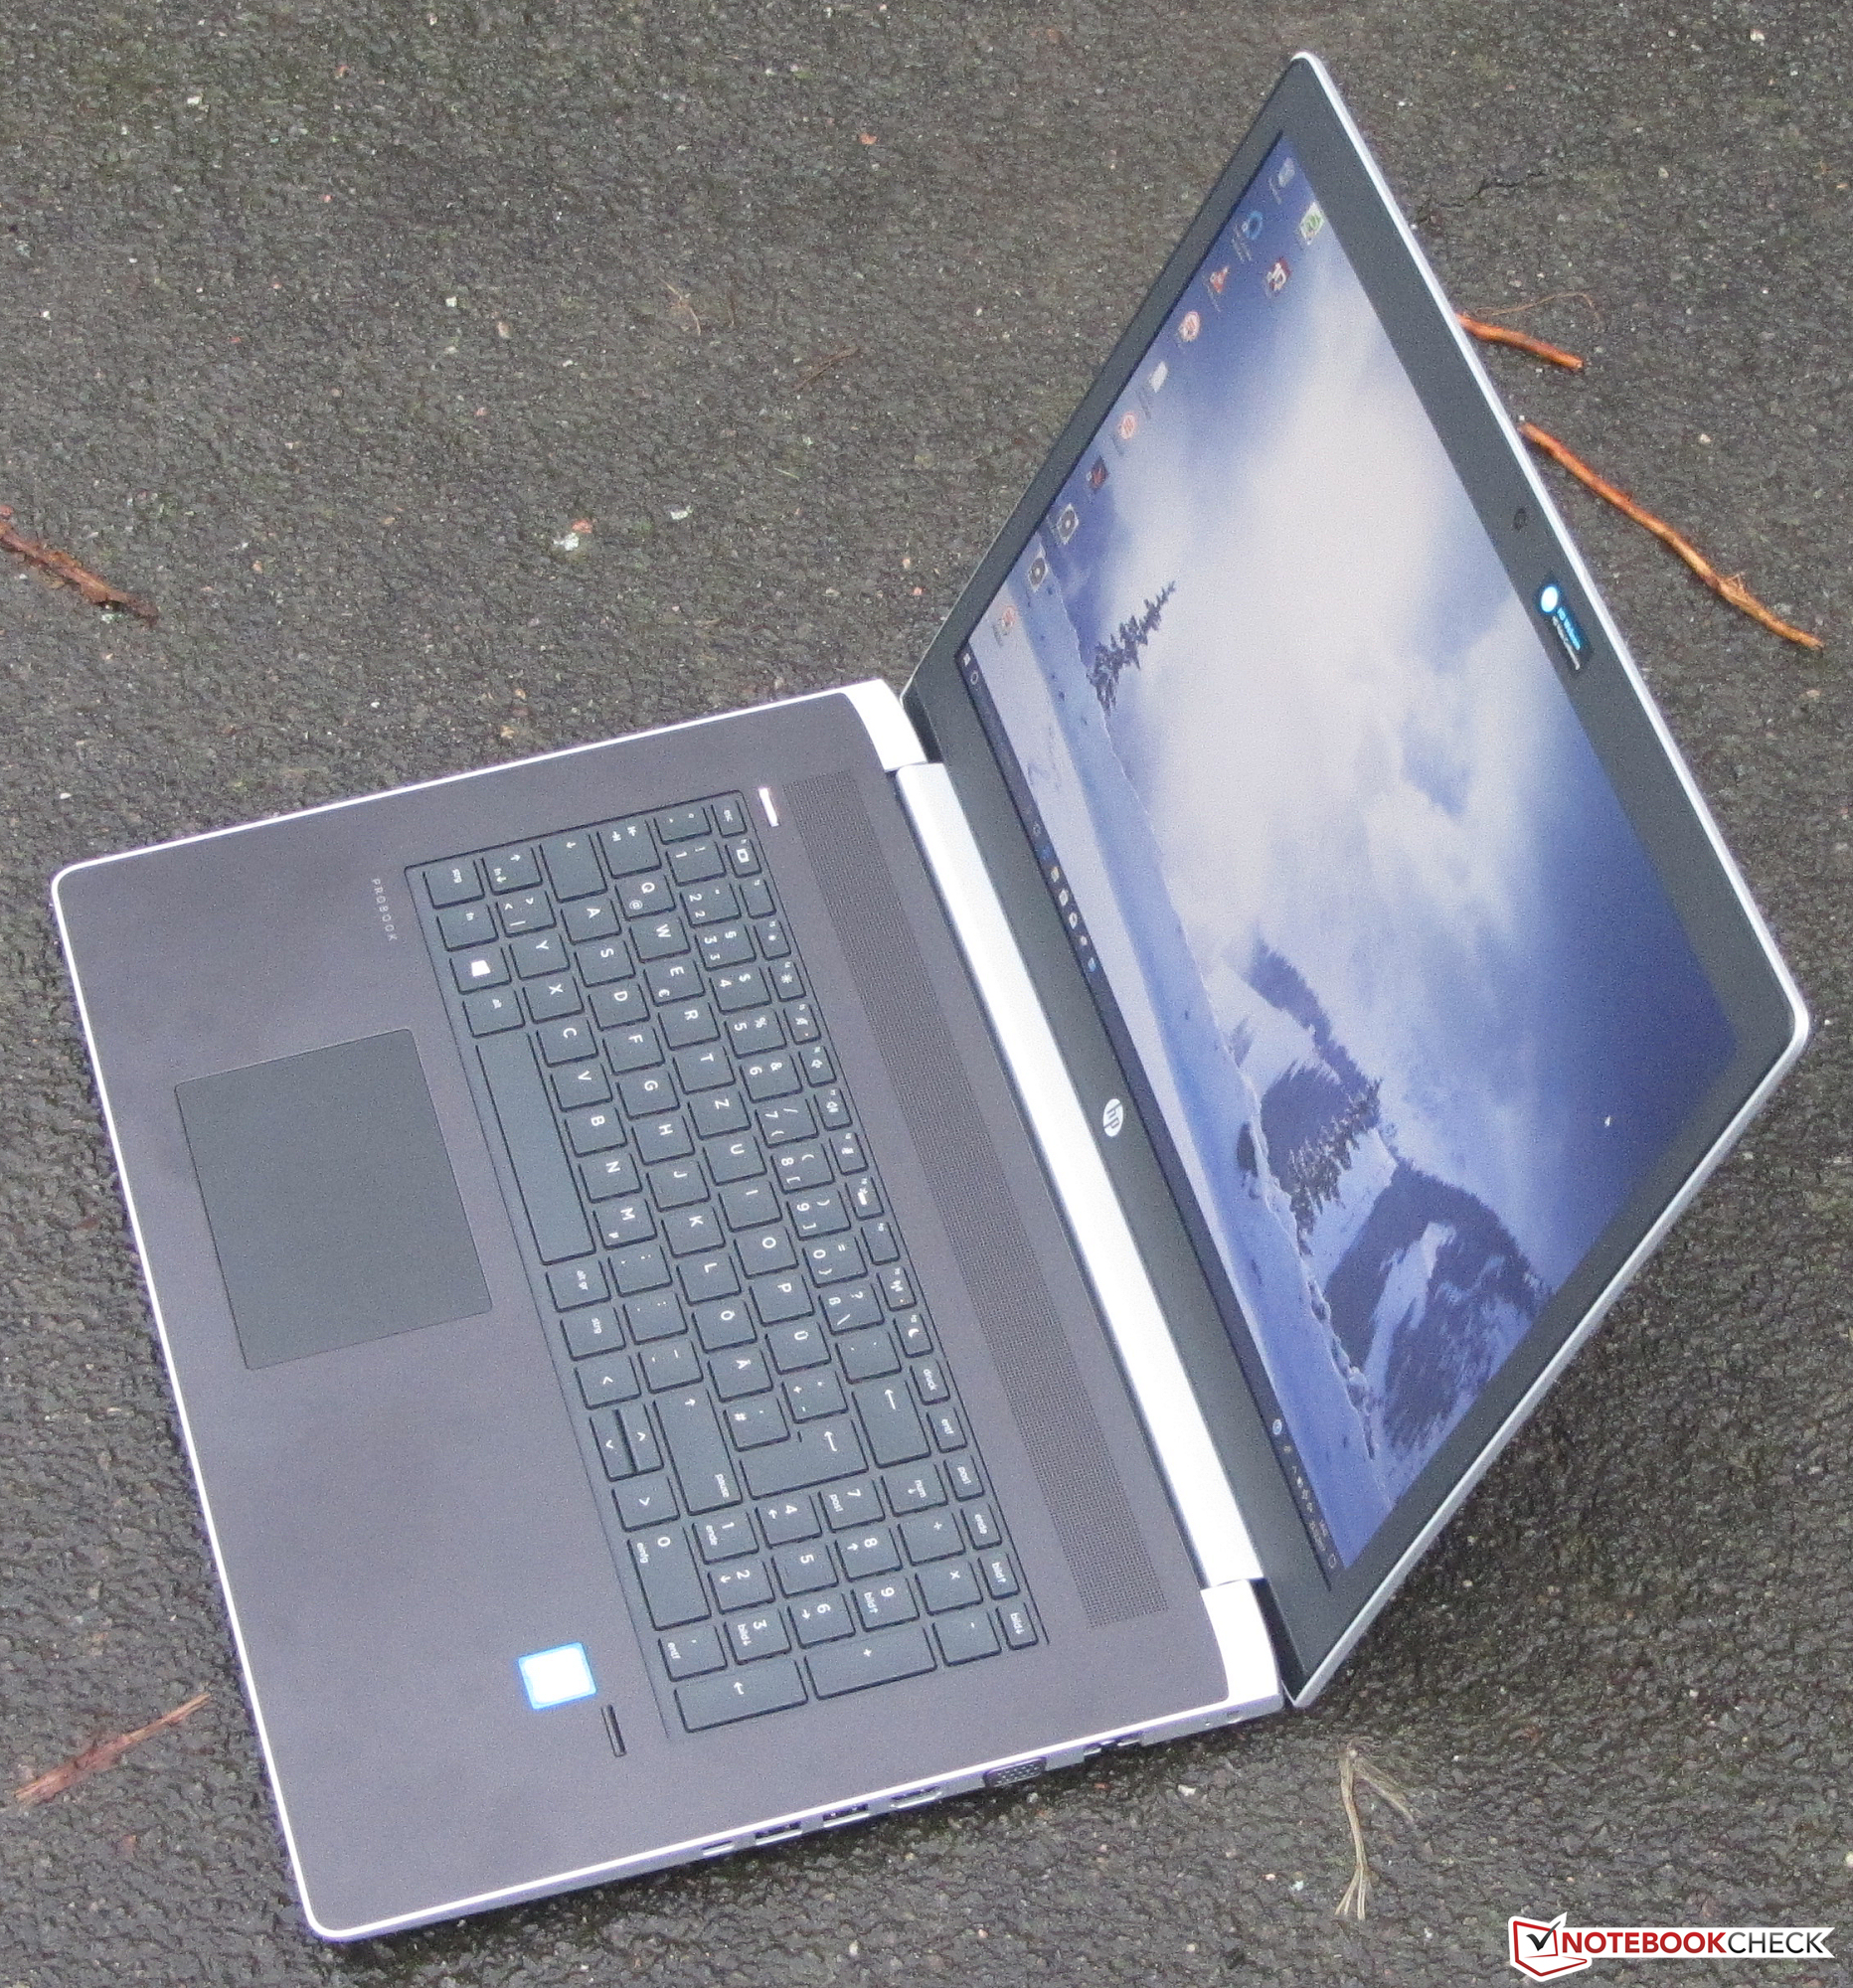 HP ProBook 470 G5 (i5-8250U, 930MX, SSD, FHD) Laptop Review